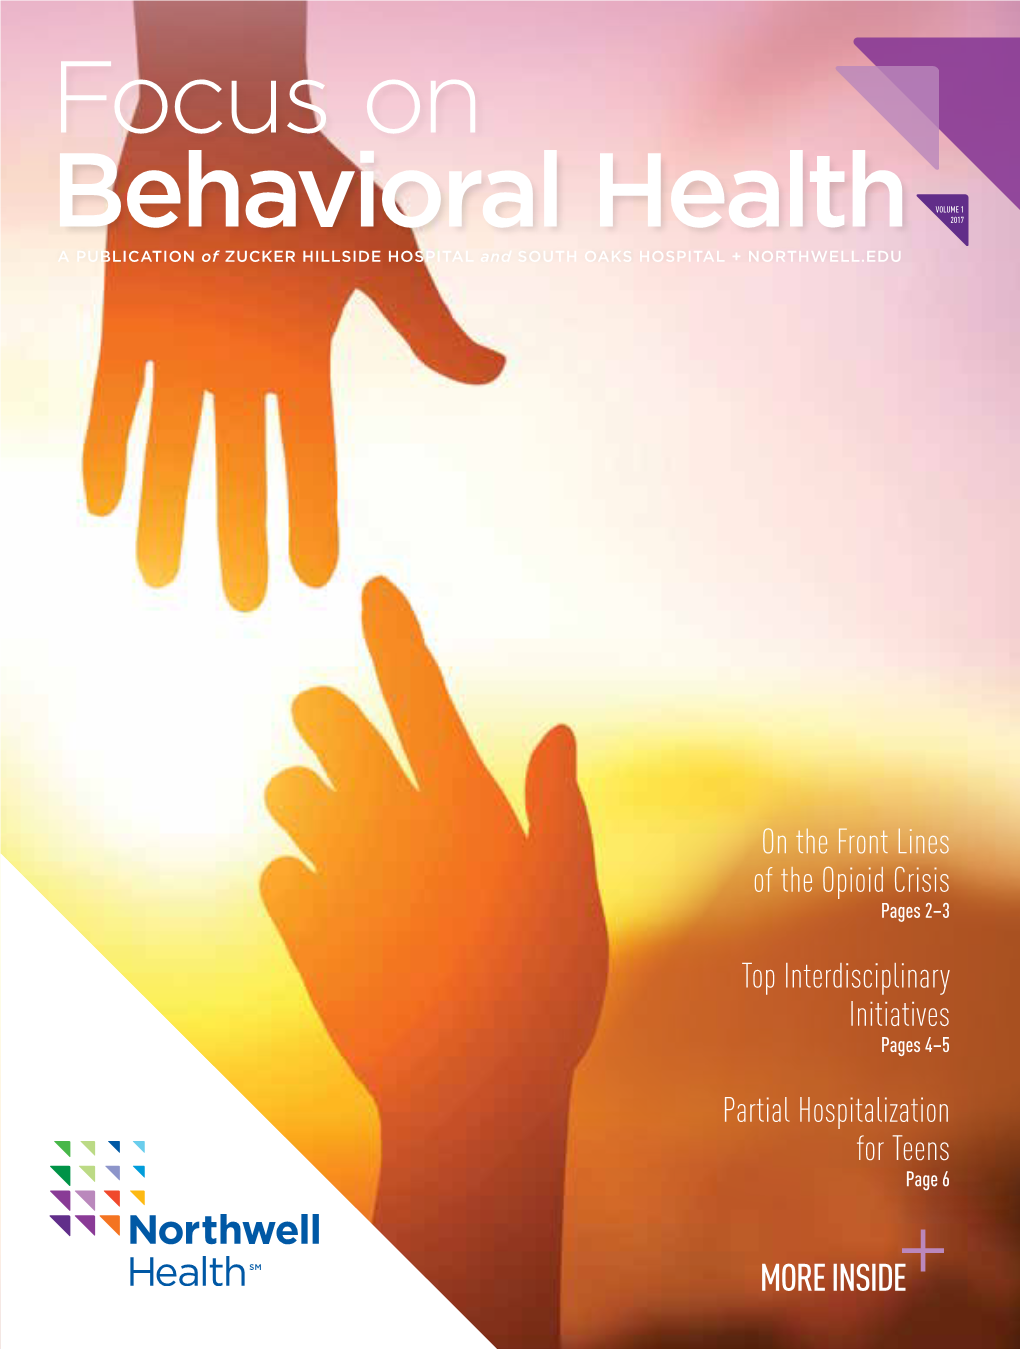 Behavioral Health 2017 a PUBLICATION of ZUCKER HILLSIDE HOSPITAL and SOUTH OAKS HOSPITAL + NORTHWELL.EDU